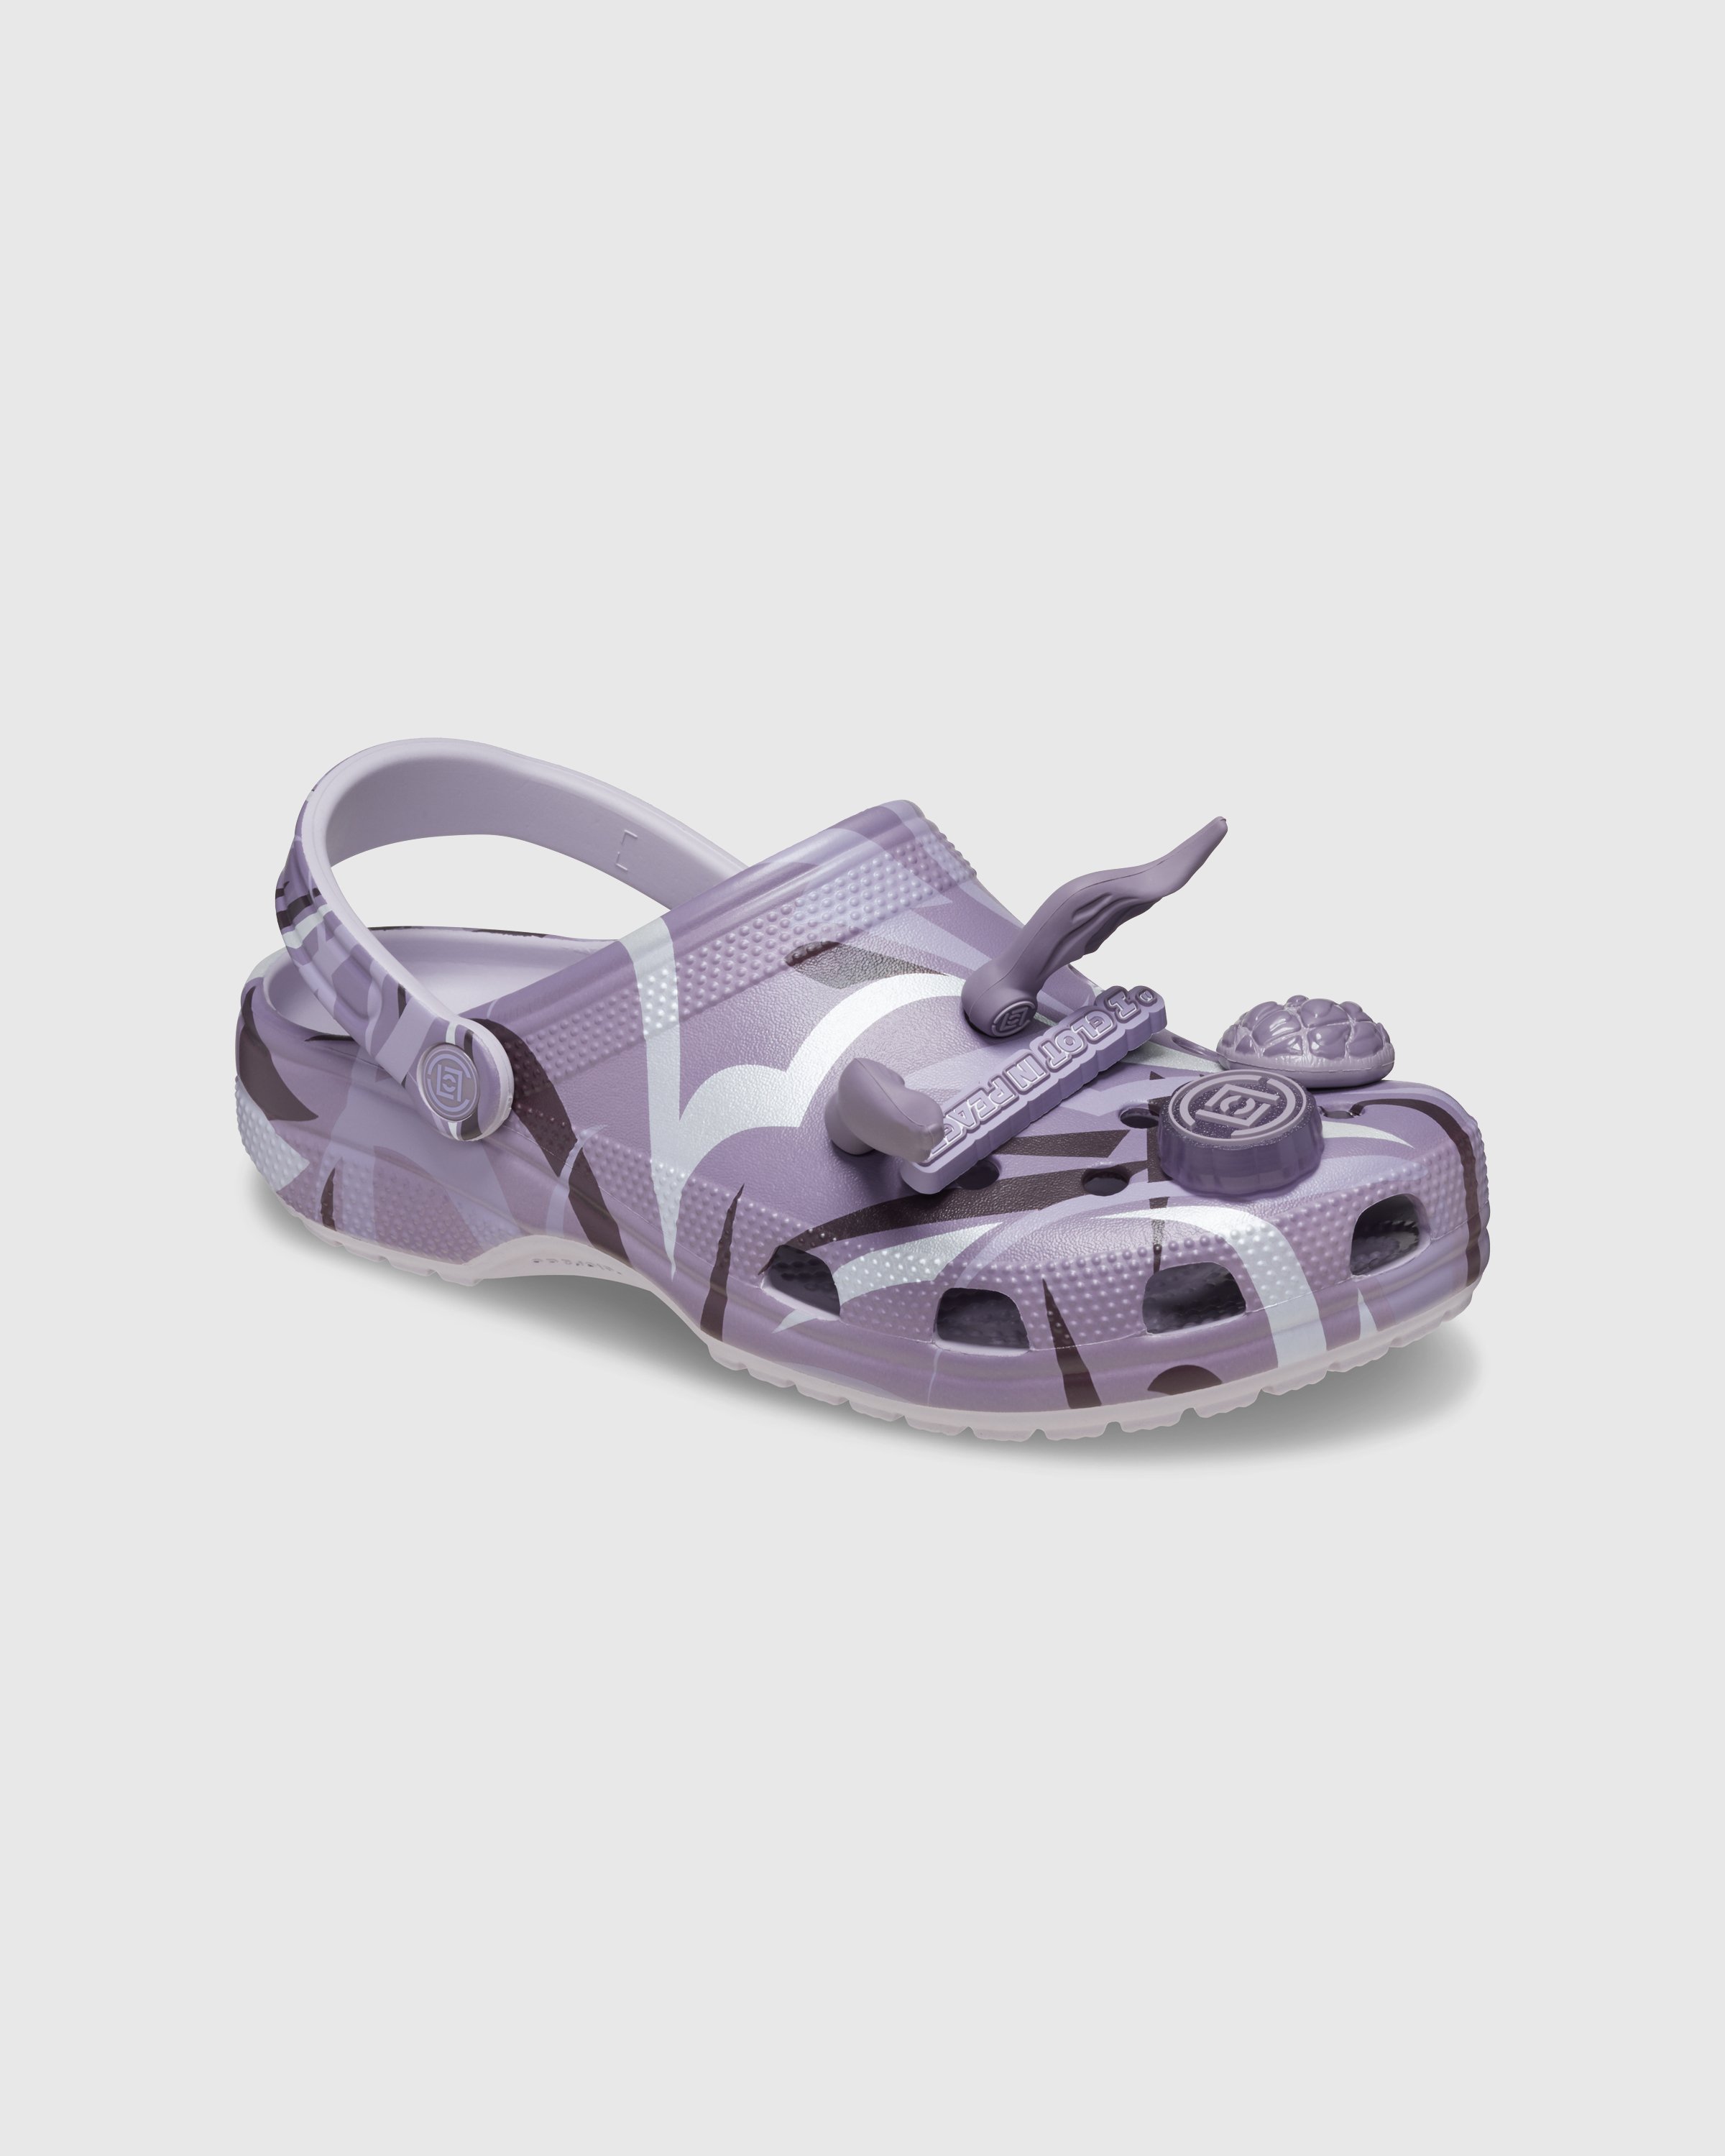 CLOT x Crocs - Classic Clog Mauve Mist - Footwear - Purple - Image 3